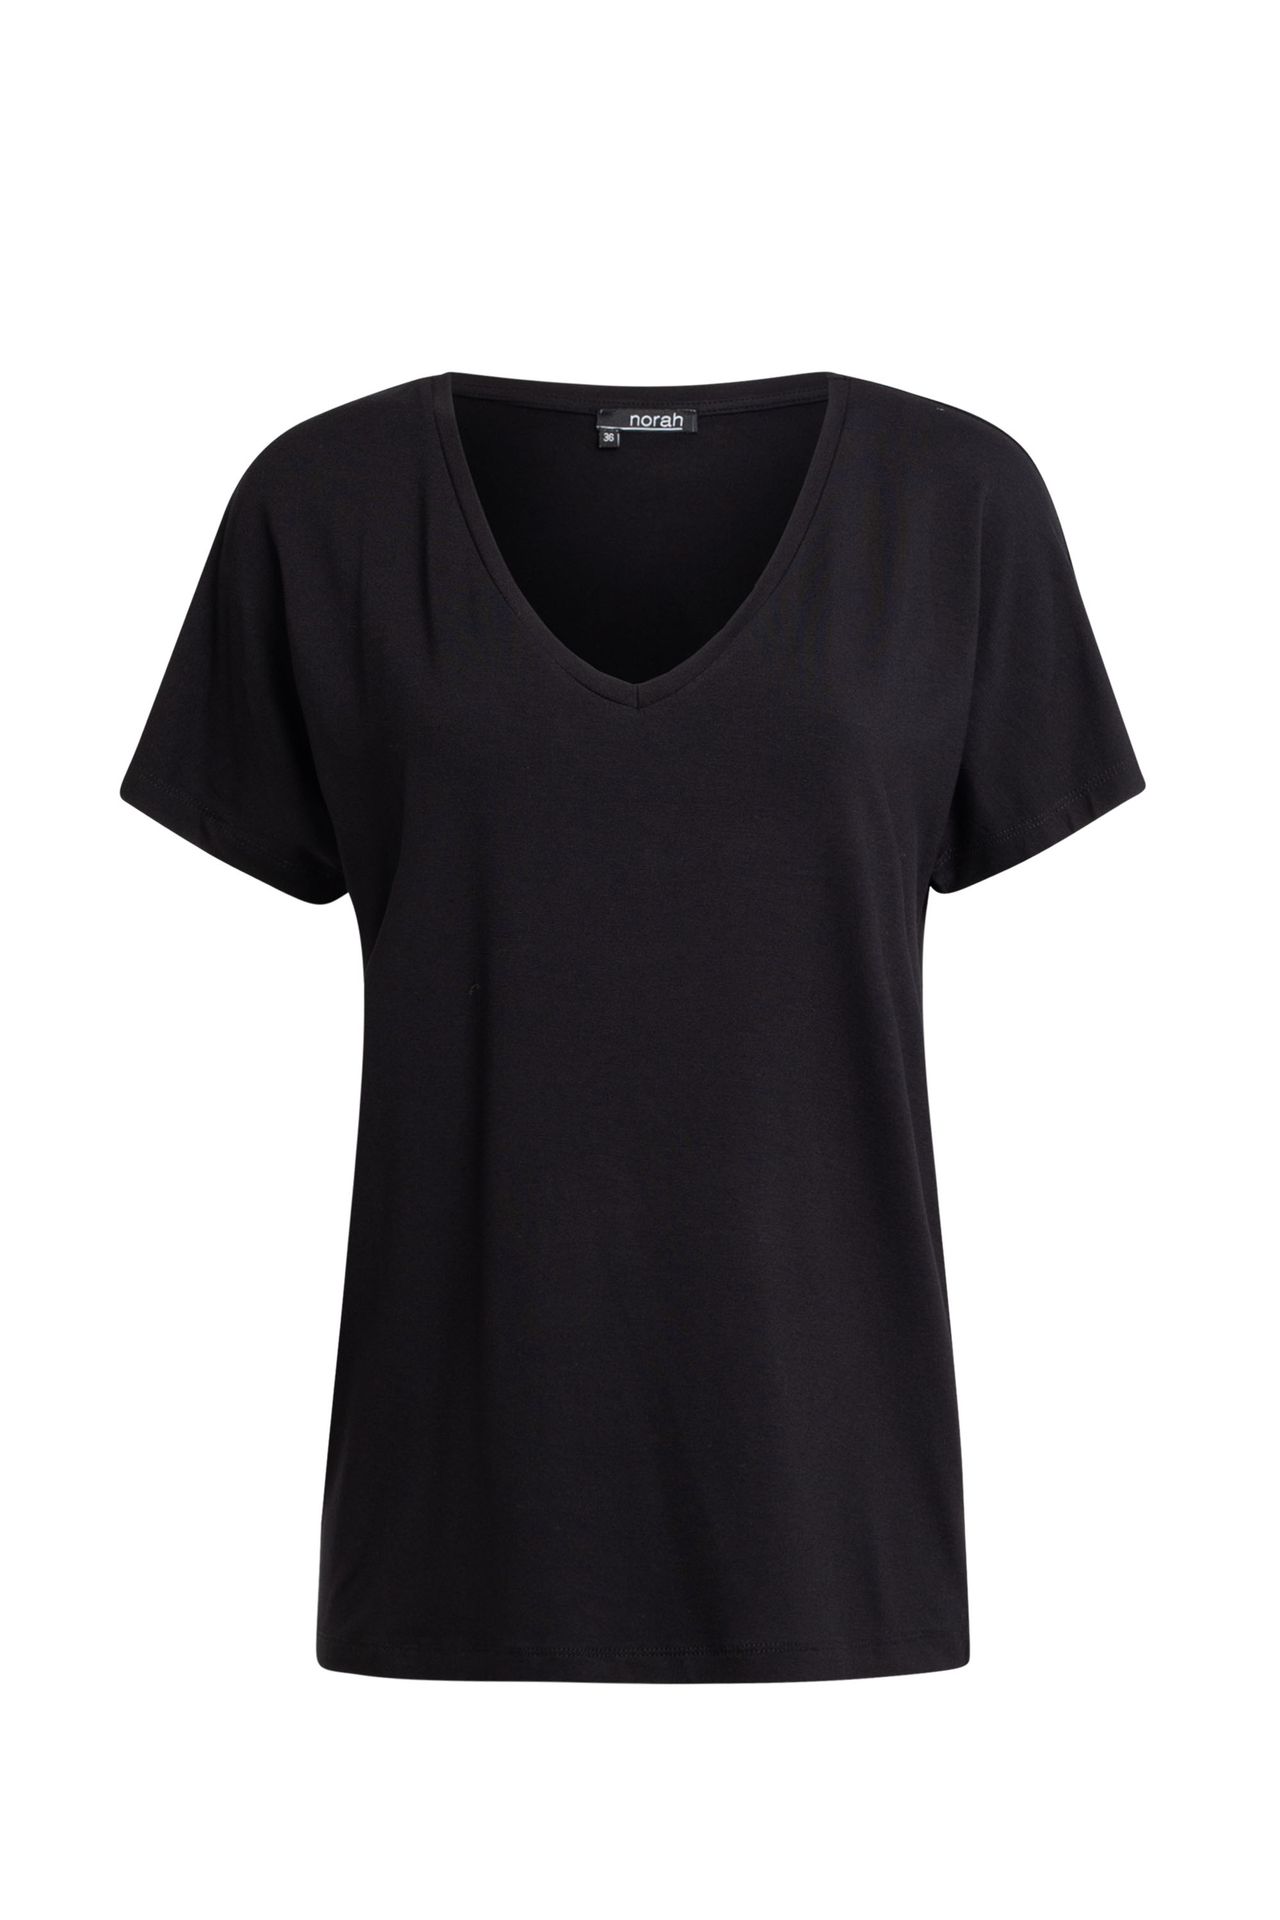 Norah Shirt Maral zwart  black 208968-001